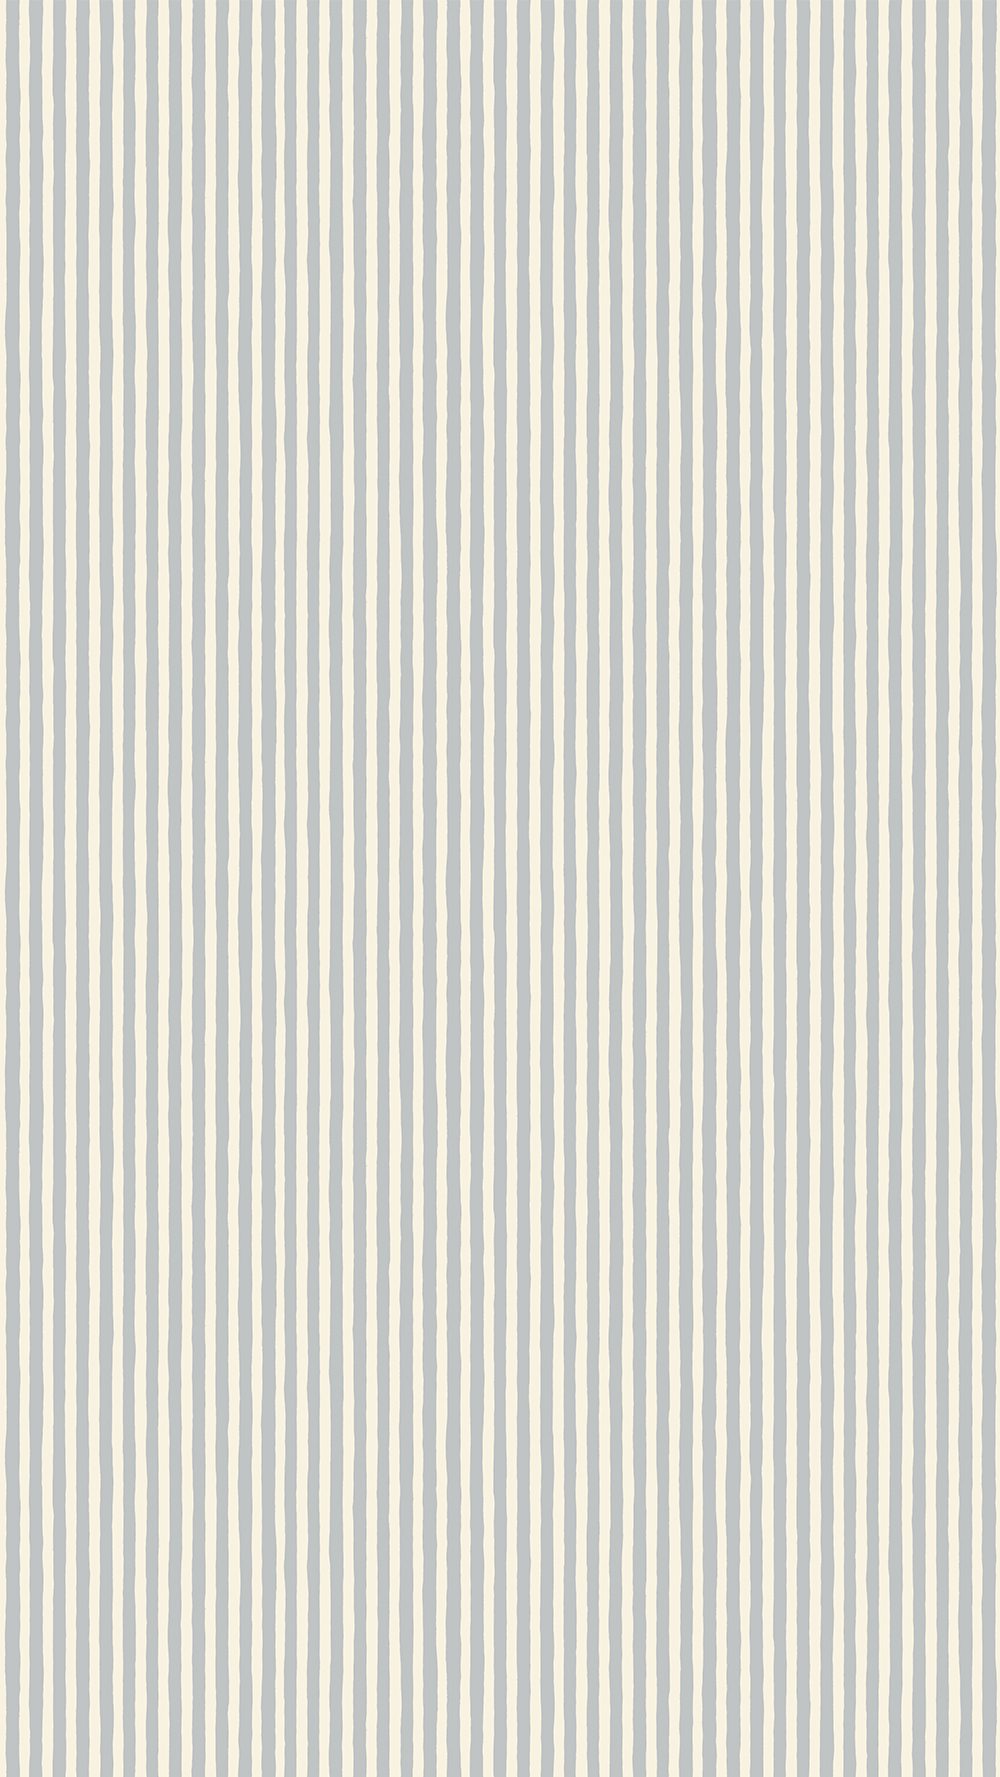 HPS-034-048 - Hand Painted Stripe - Barton Blue - Costwold White - Flat Shot